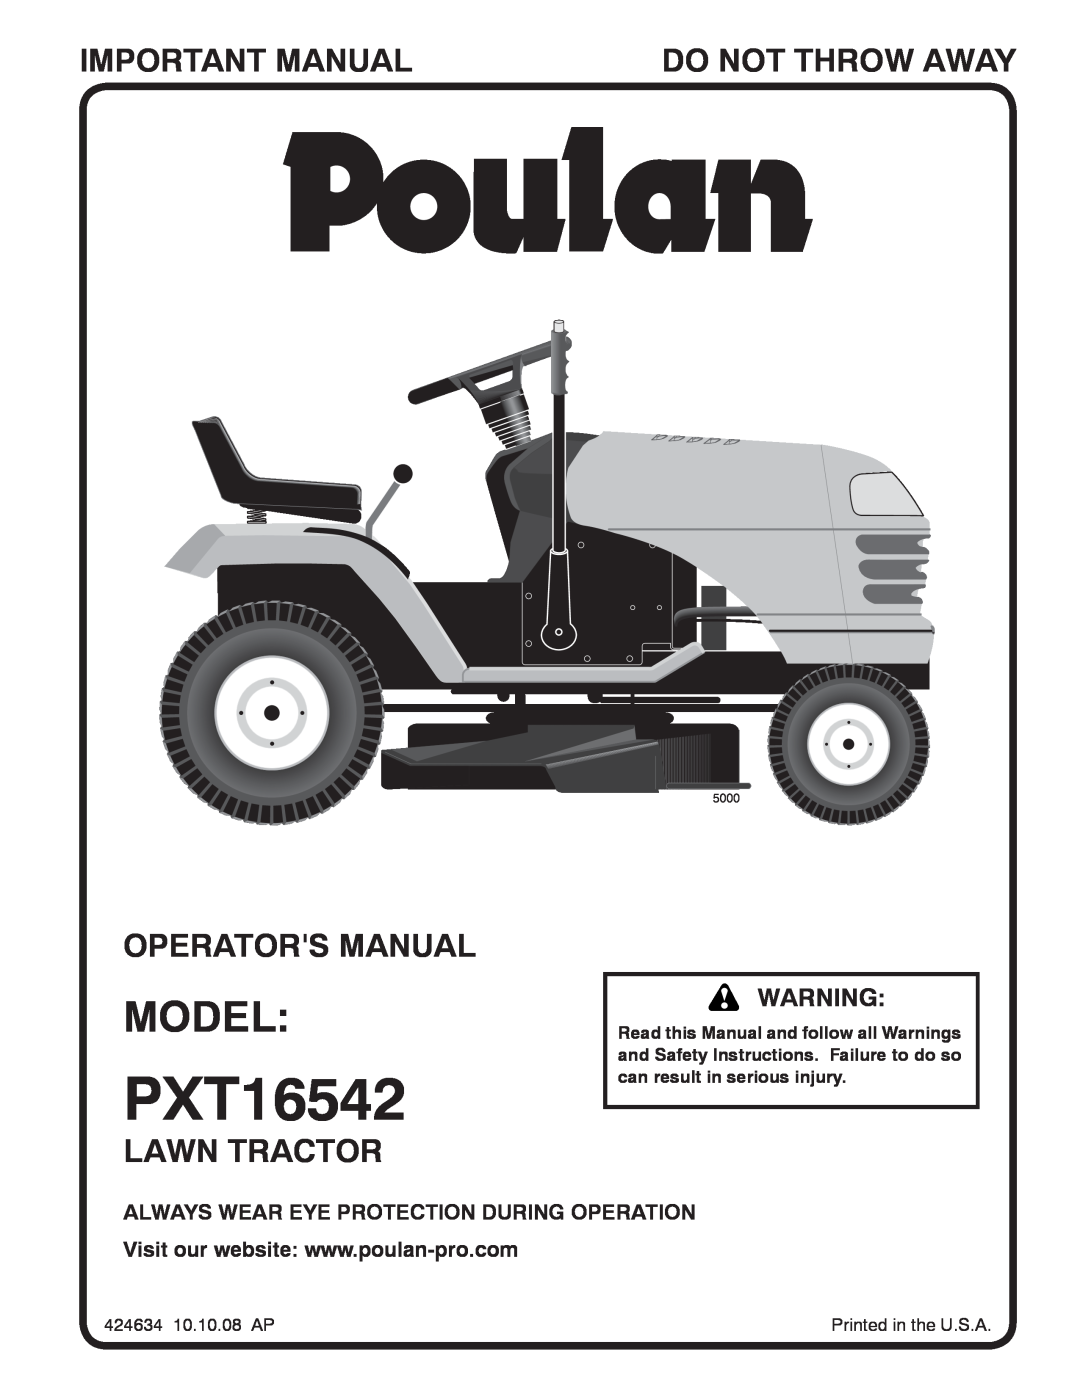 Poulan 424634 manual Important Manual, Do Not Throw Away, Operators Manual, Lawn Tractor, PXT16542, Model, 5000 